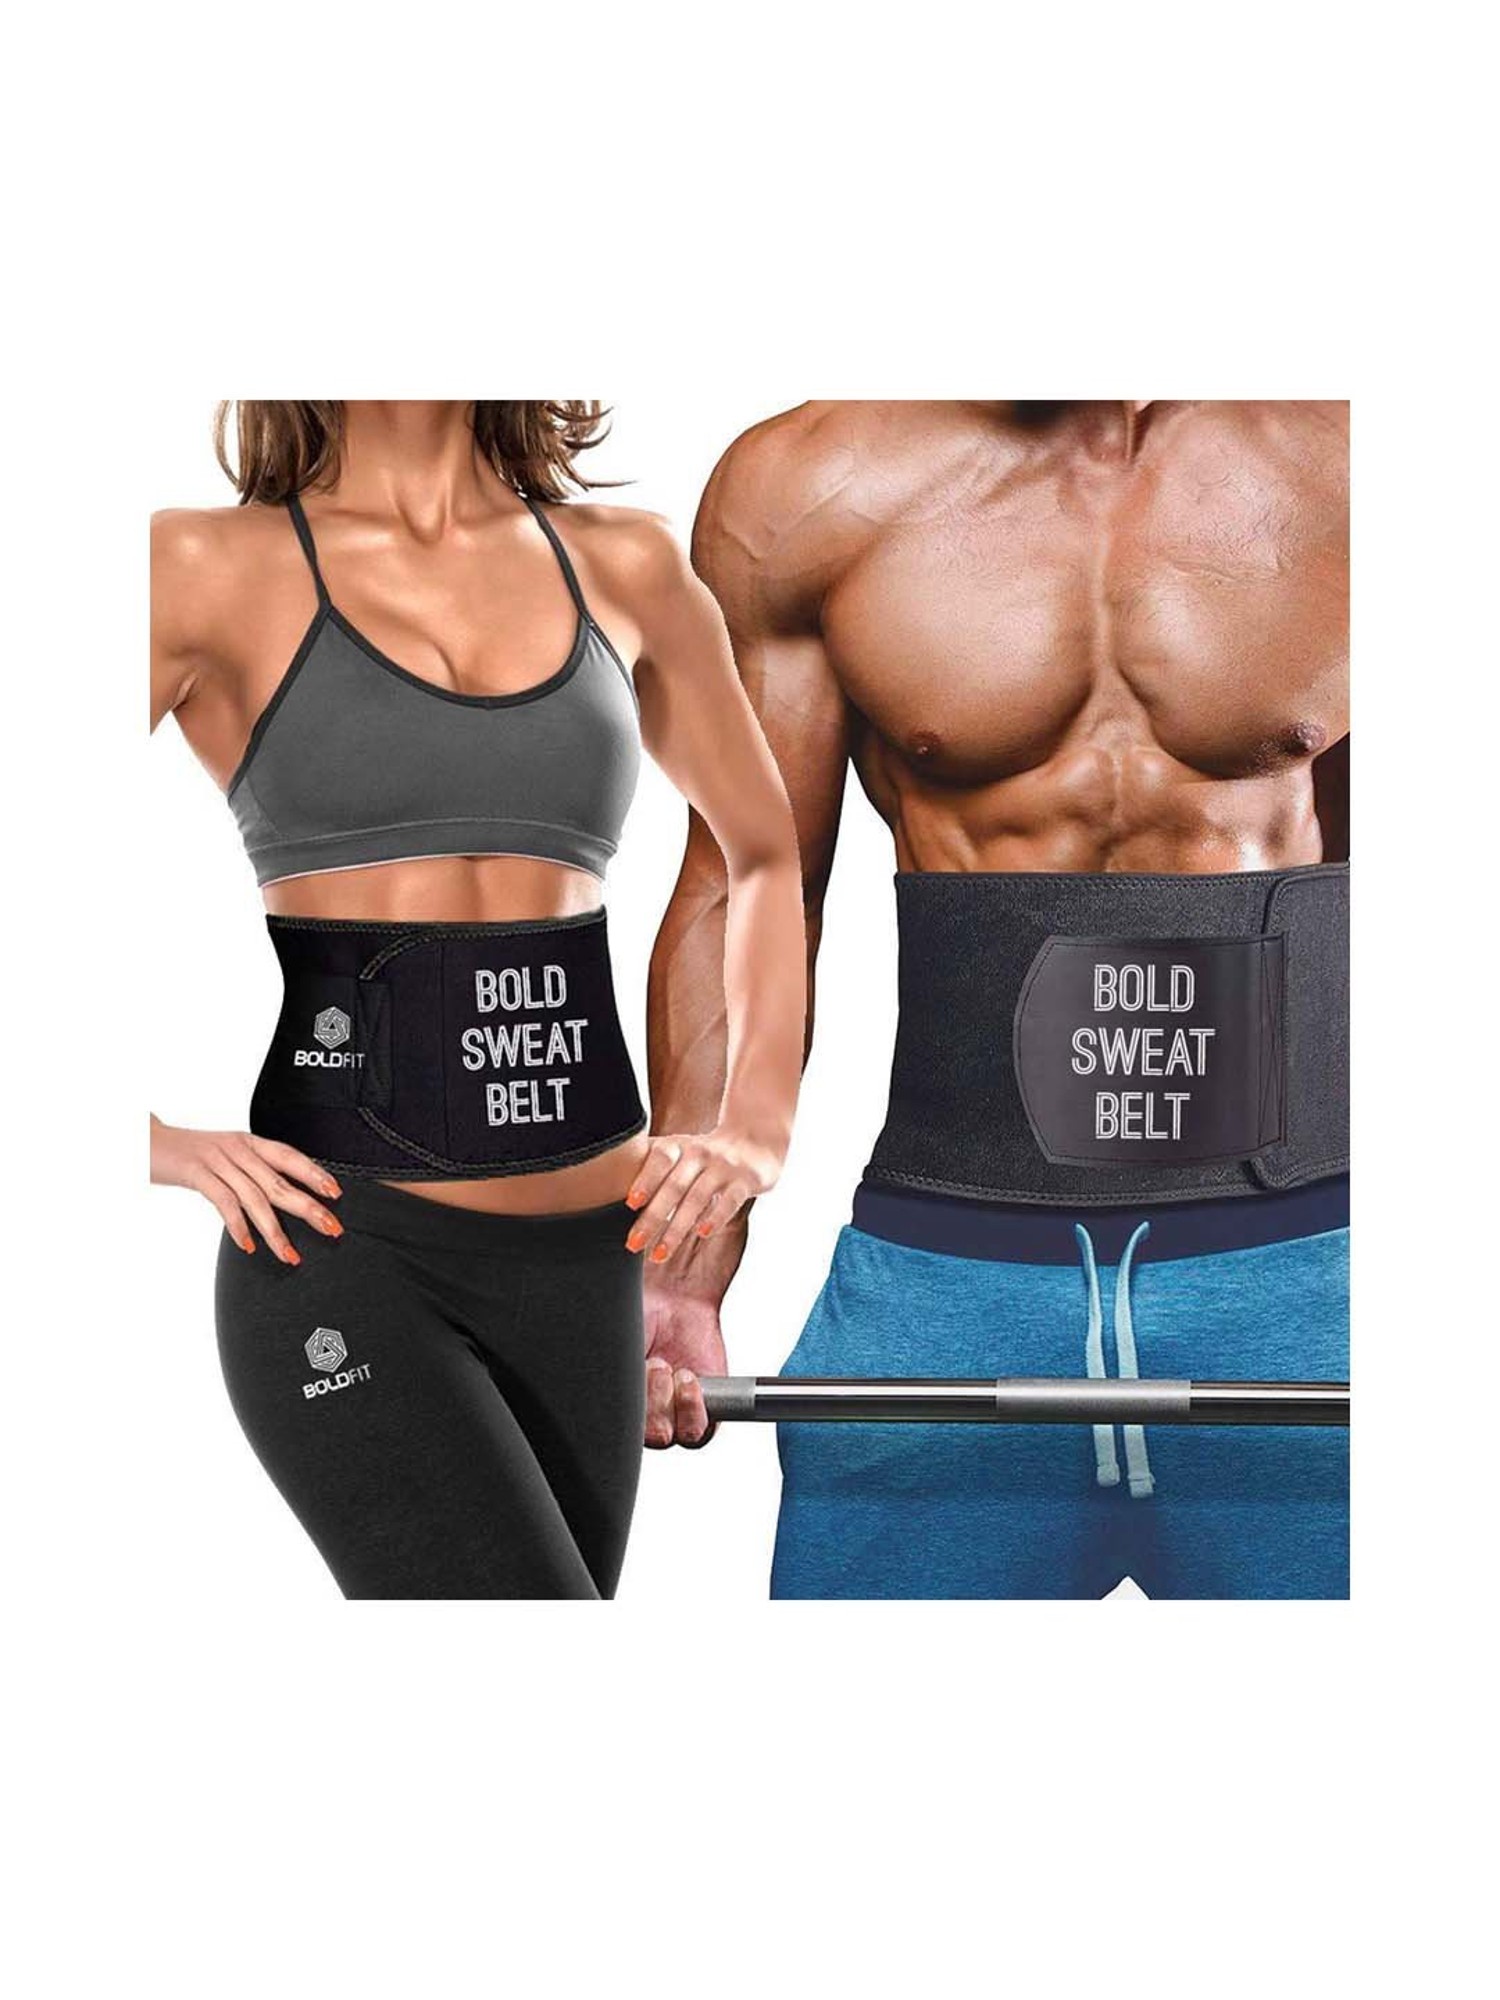 Boldfit Black Sweat Slim Belt for Men & Women (Large)